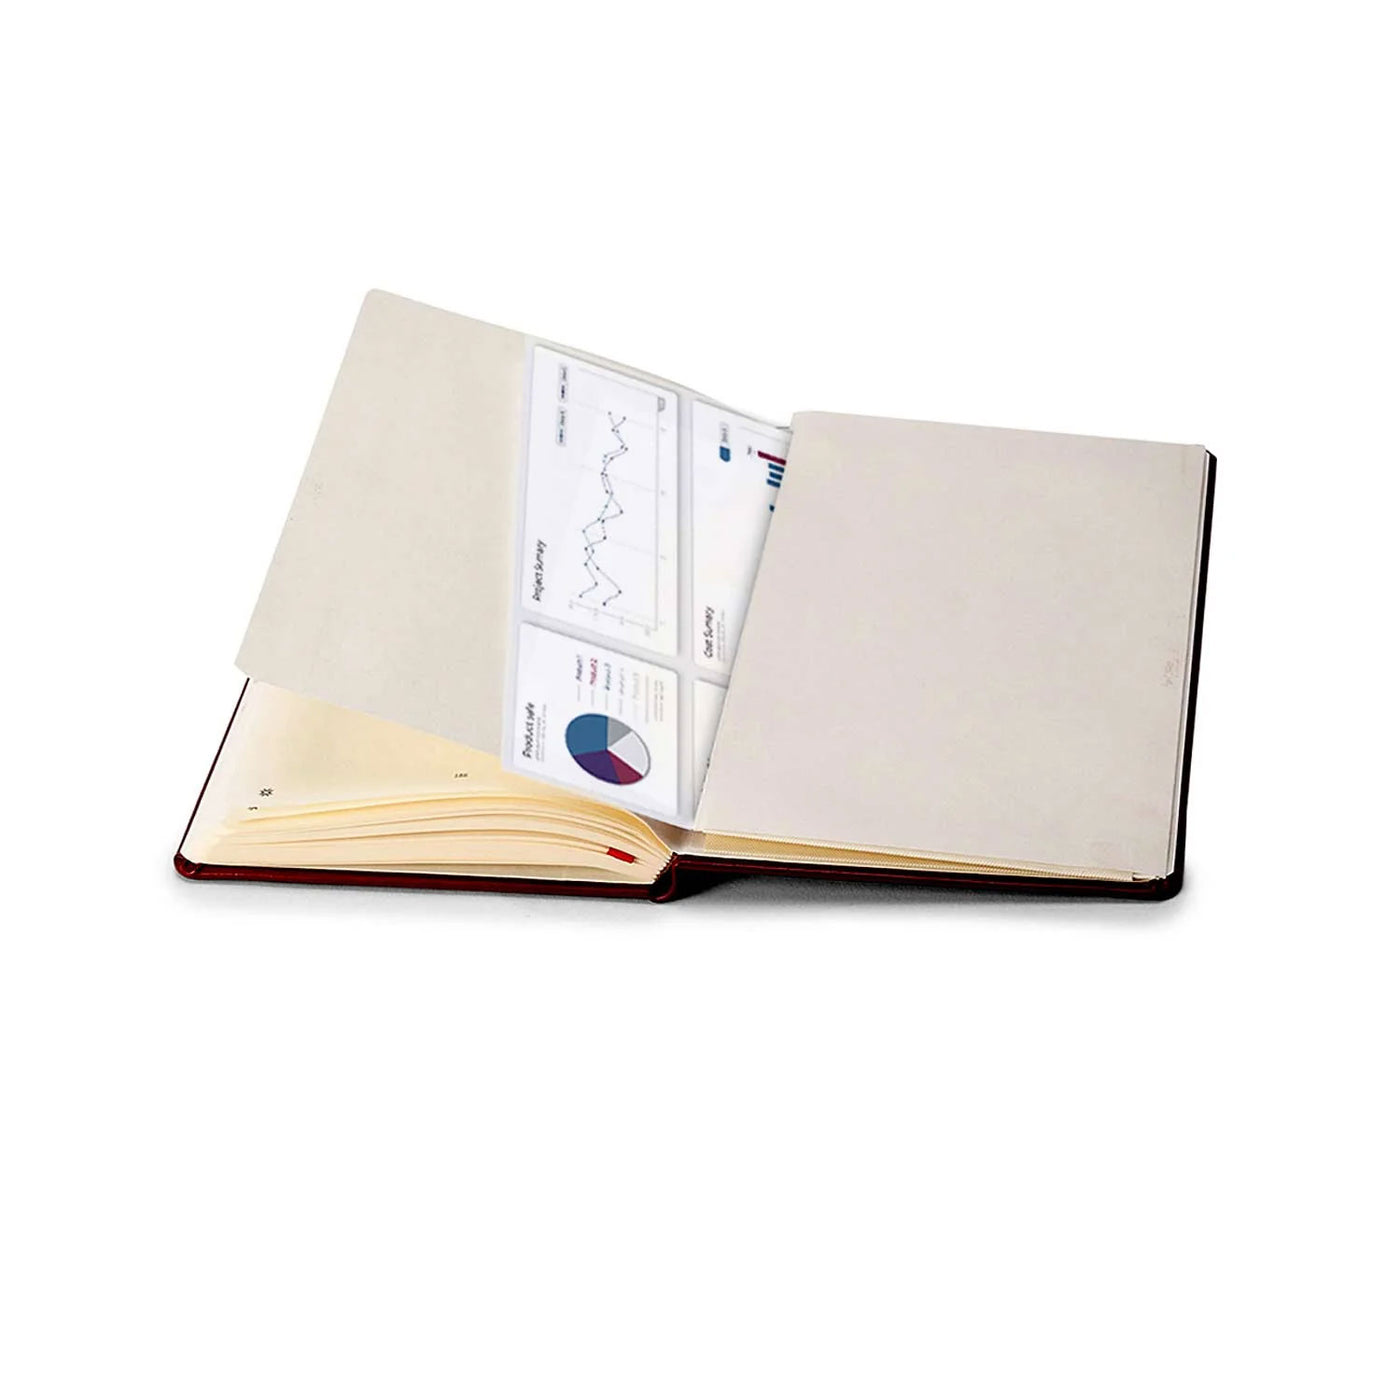 Pennline Waltz Hard Cover Notebook, Marron - Ruled 3